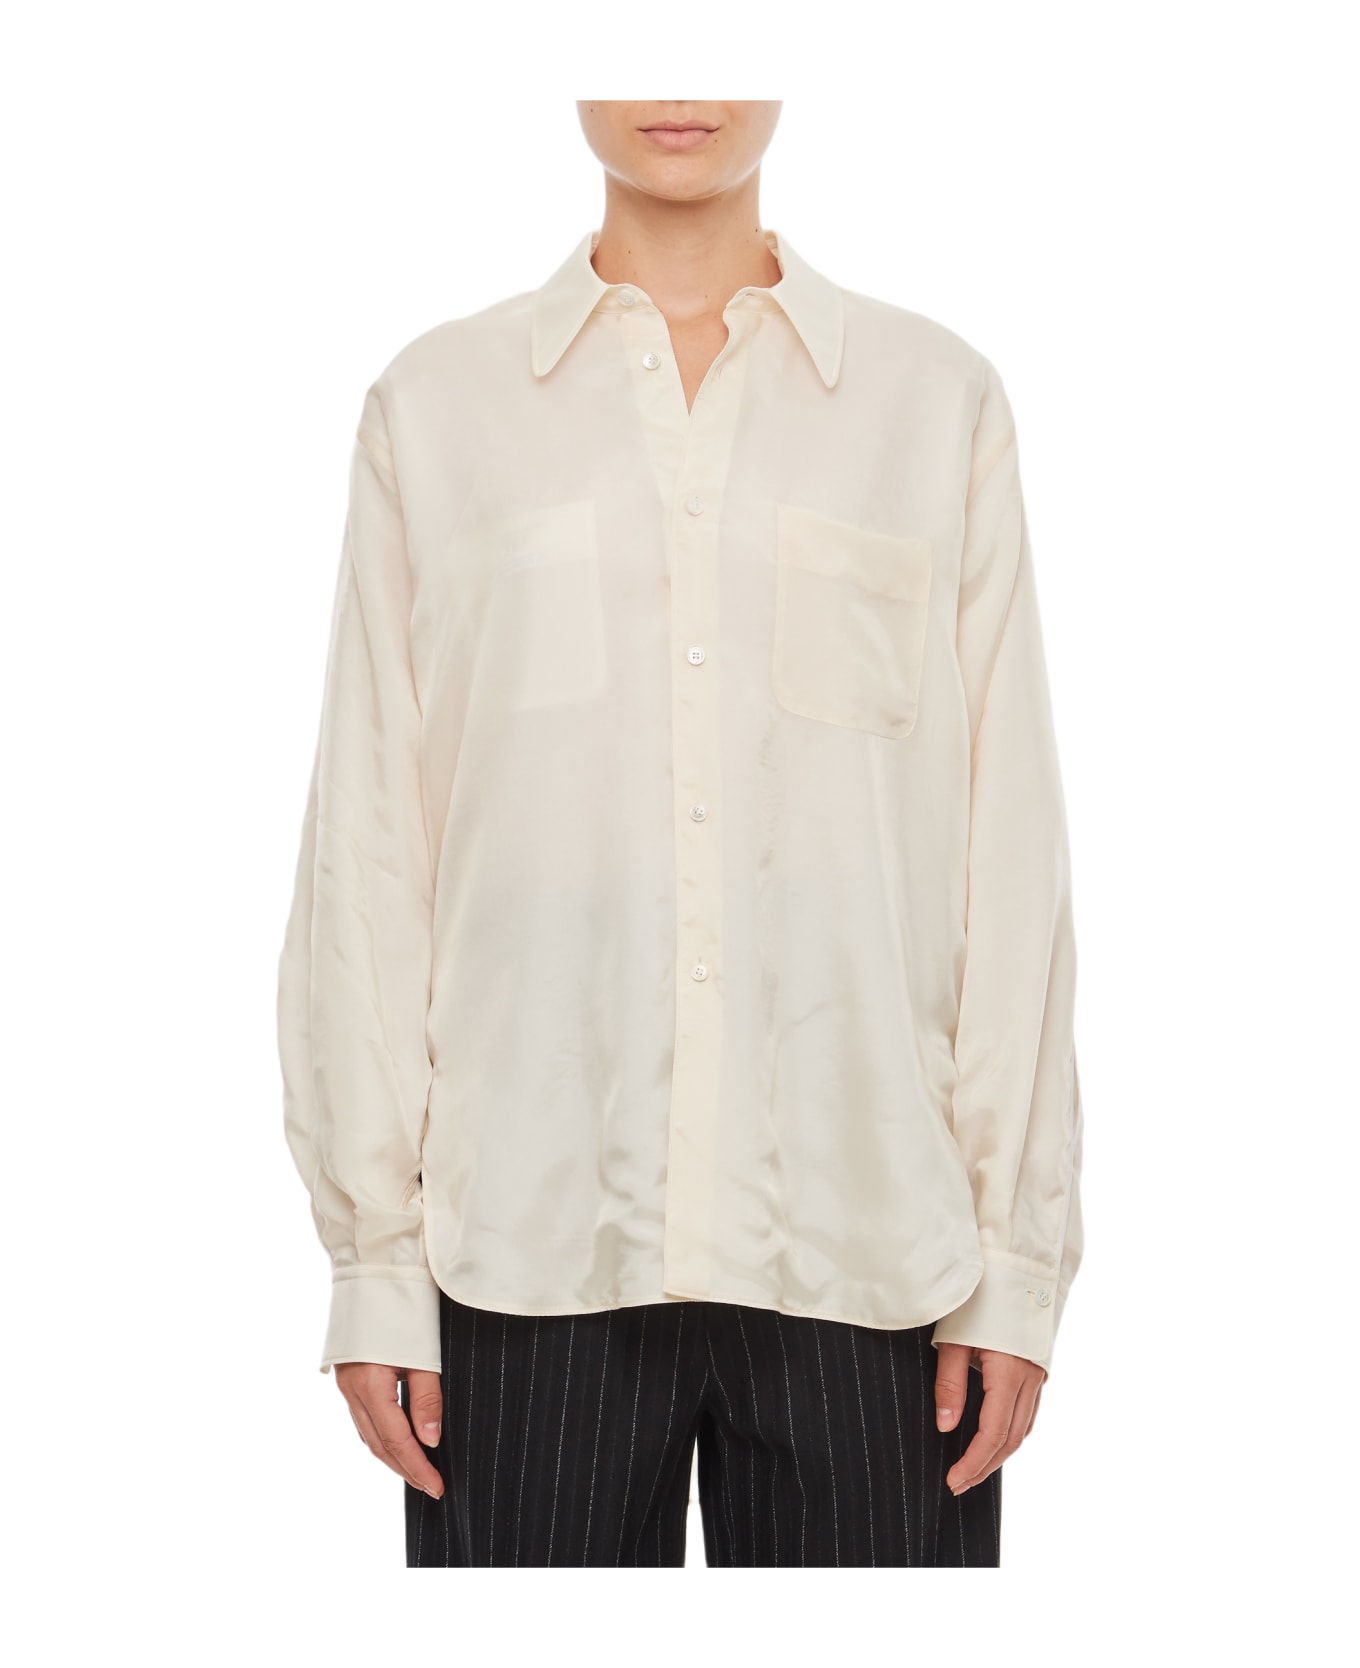 Quira Reversible Button-up Shirt - White